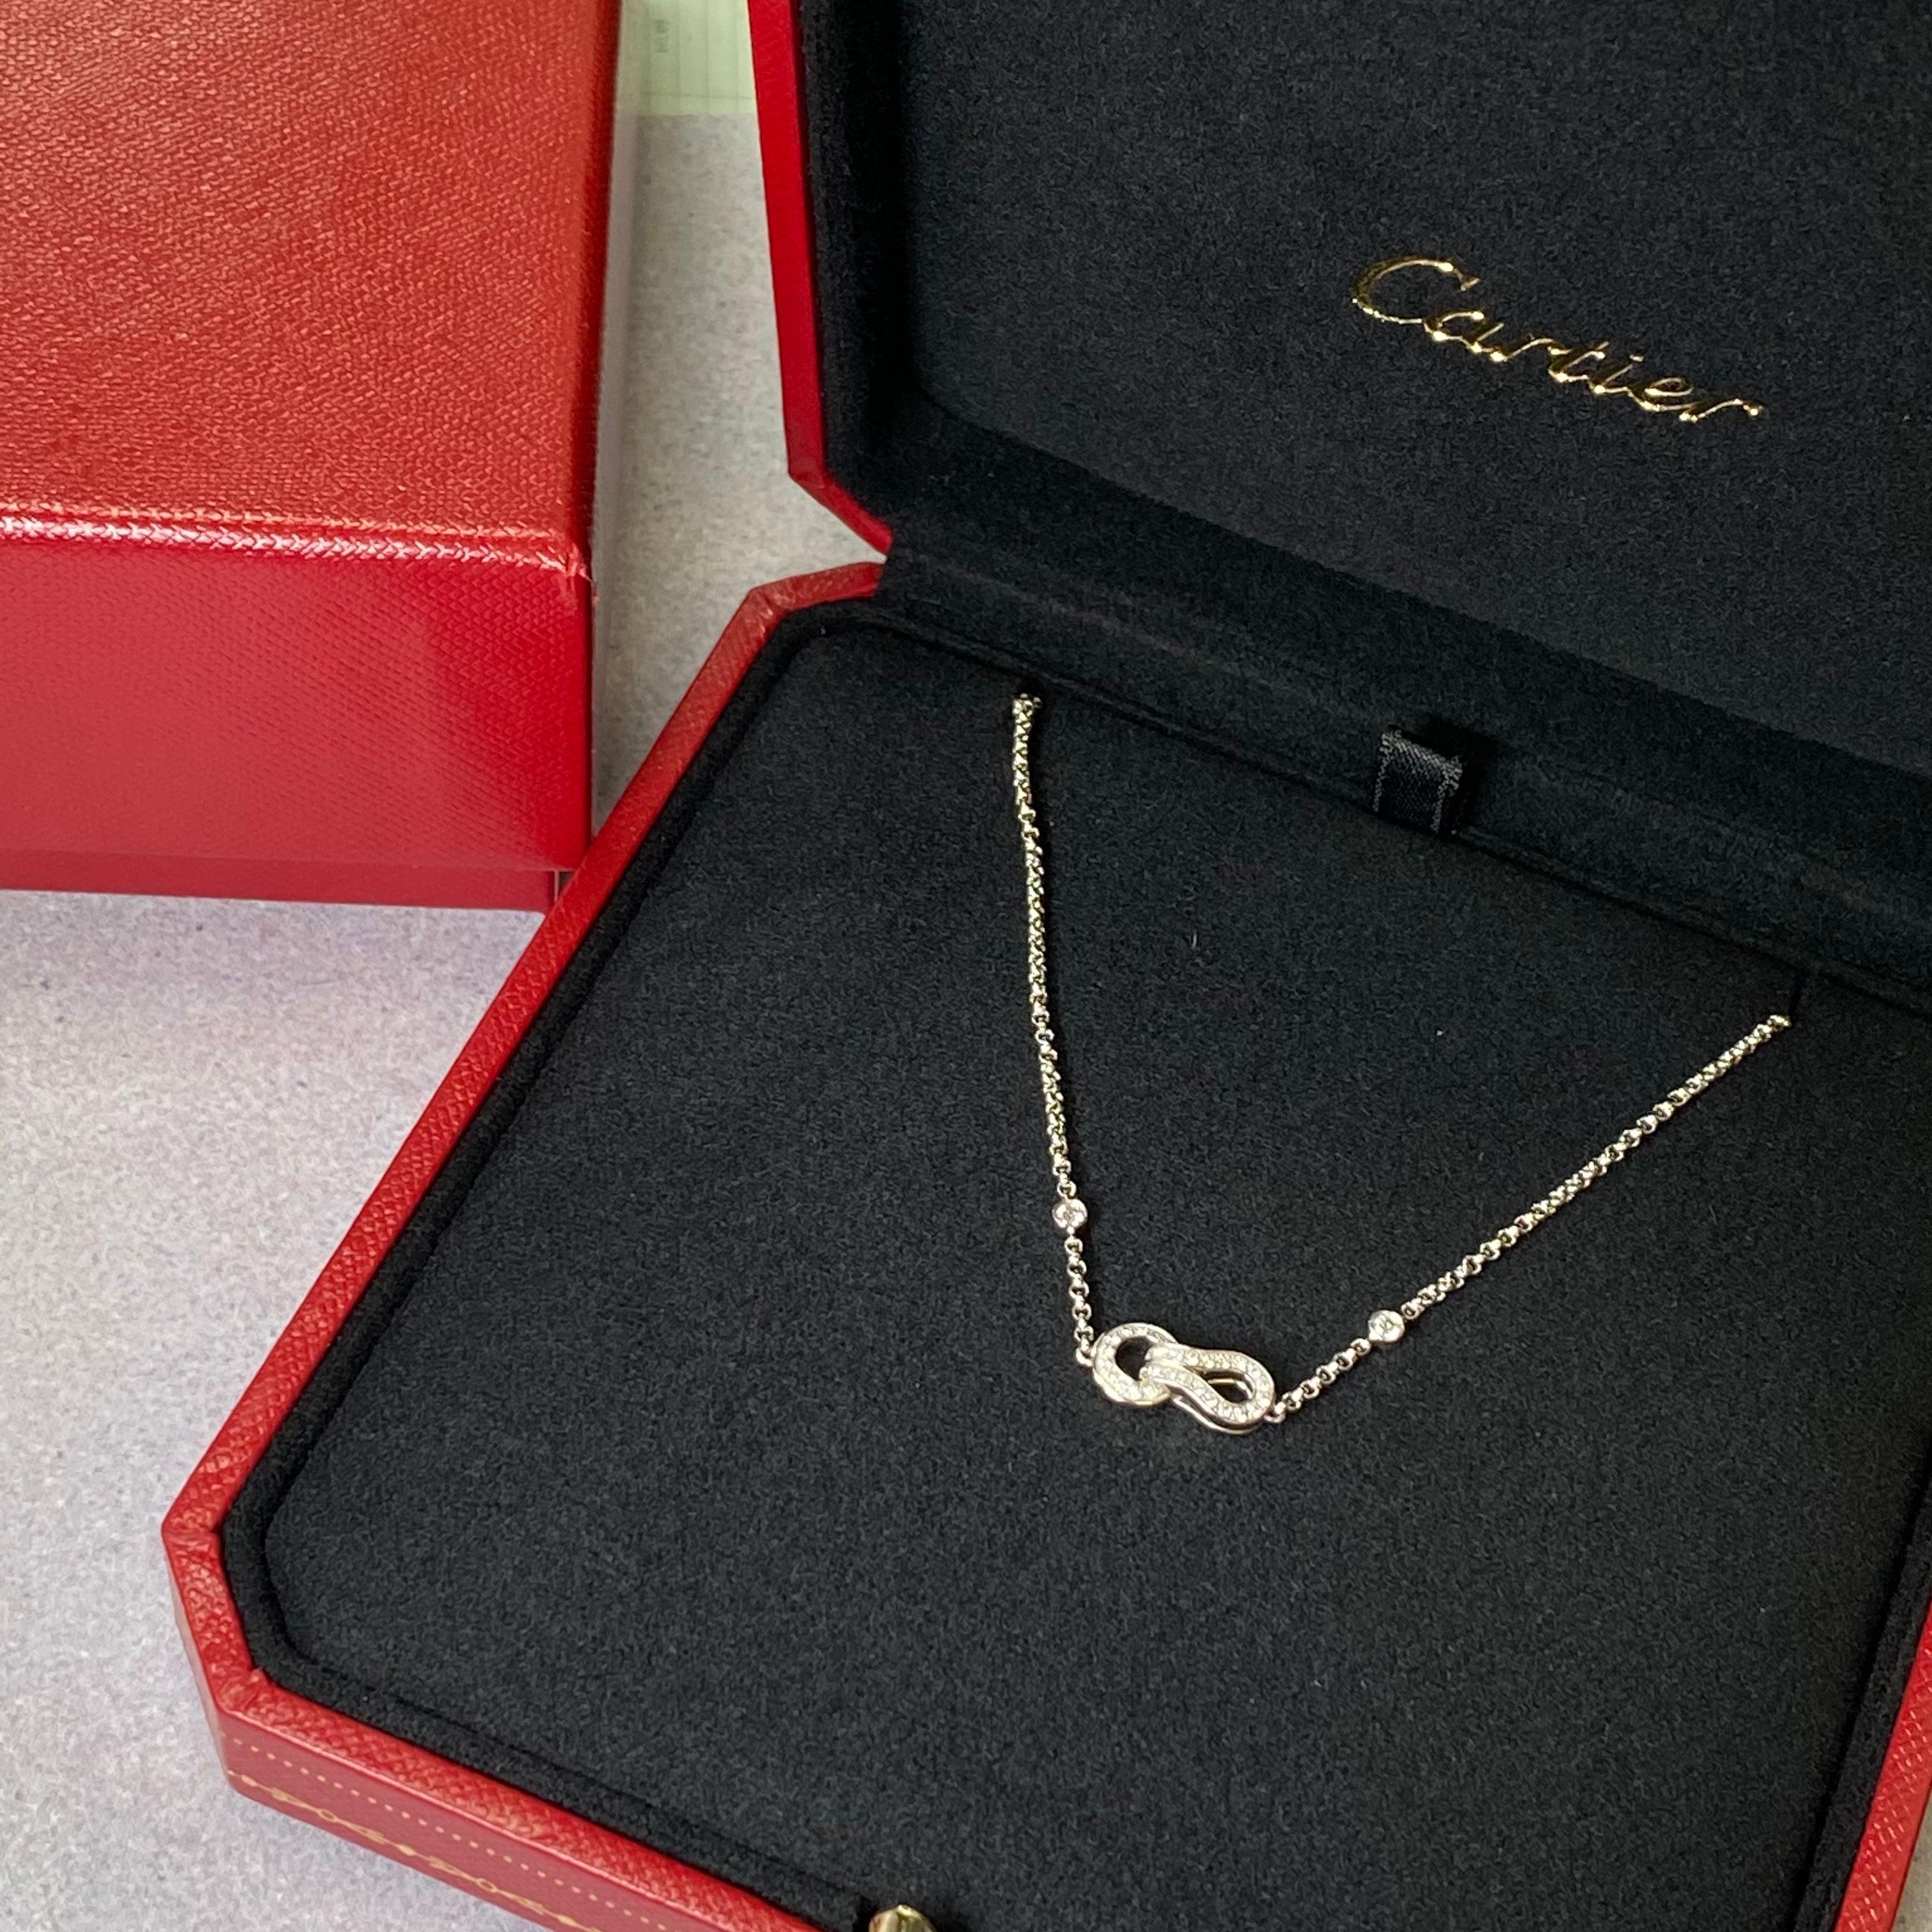 Women's Cartier 18k White Gold Diamond Agrafe Pendant Necklace 0.15cttw